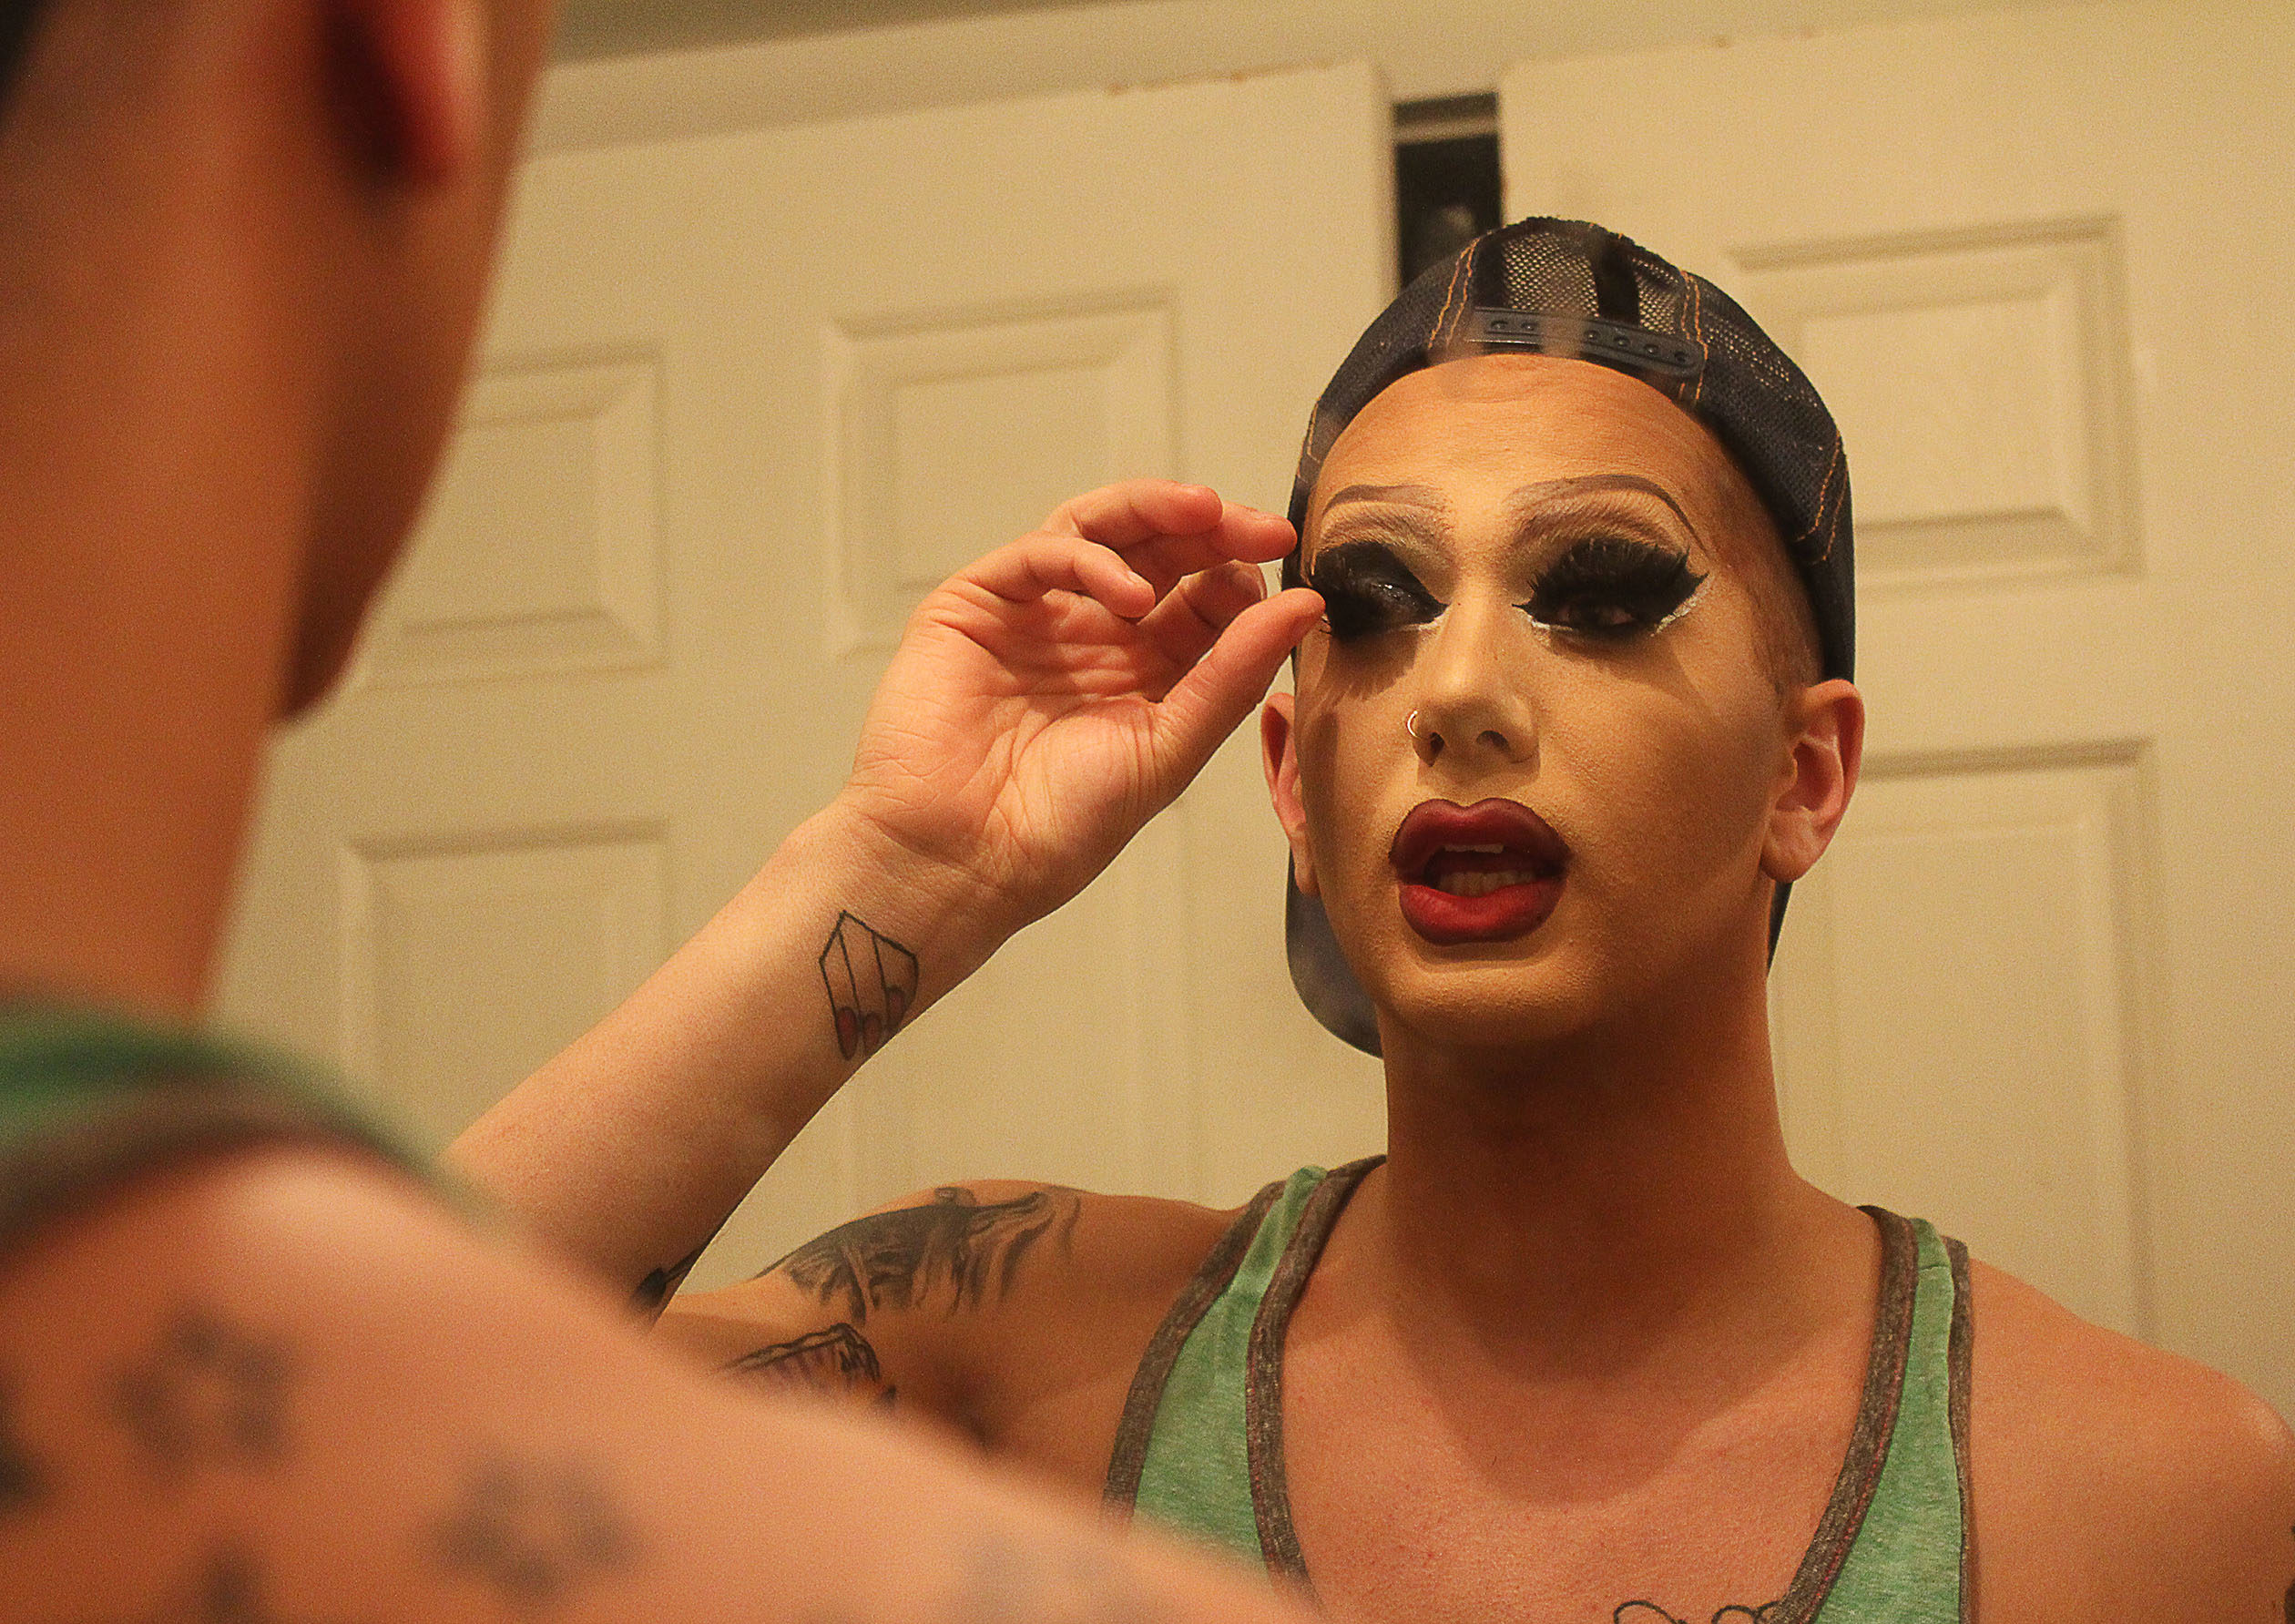 Matty Cameron applying makeup in the mirror.